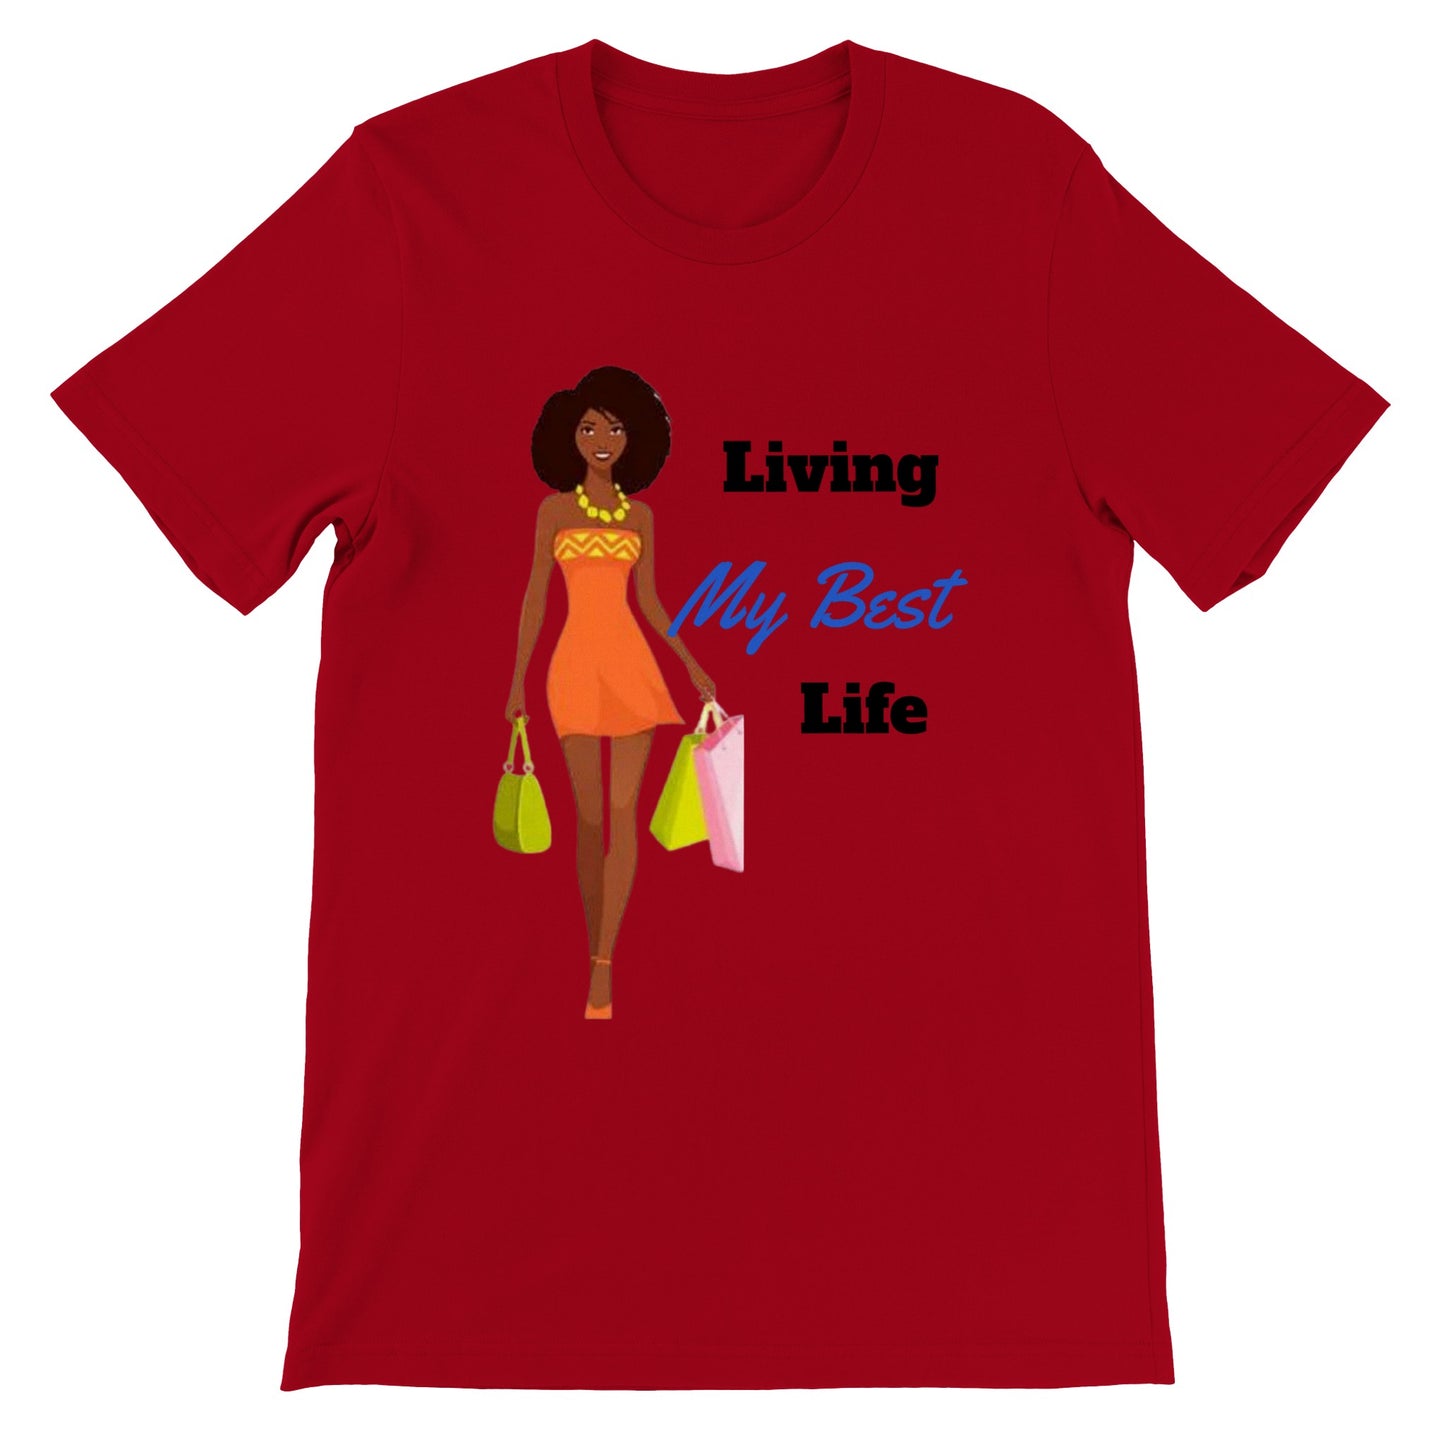 Living My Best Life.  Premium Unisex Crewneck T-shirt